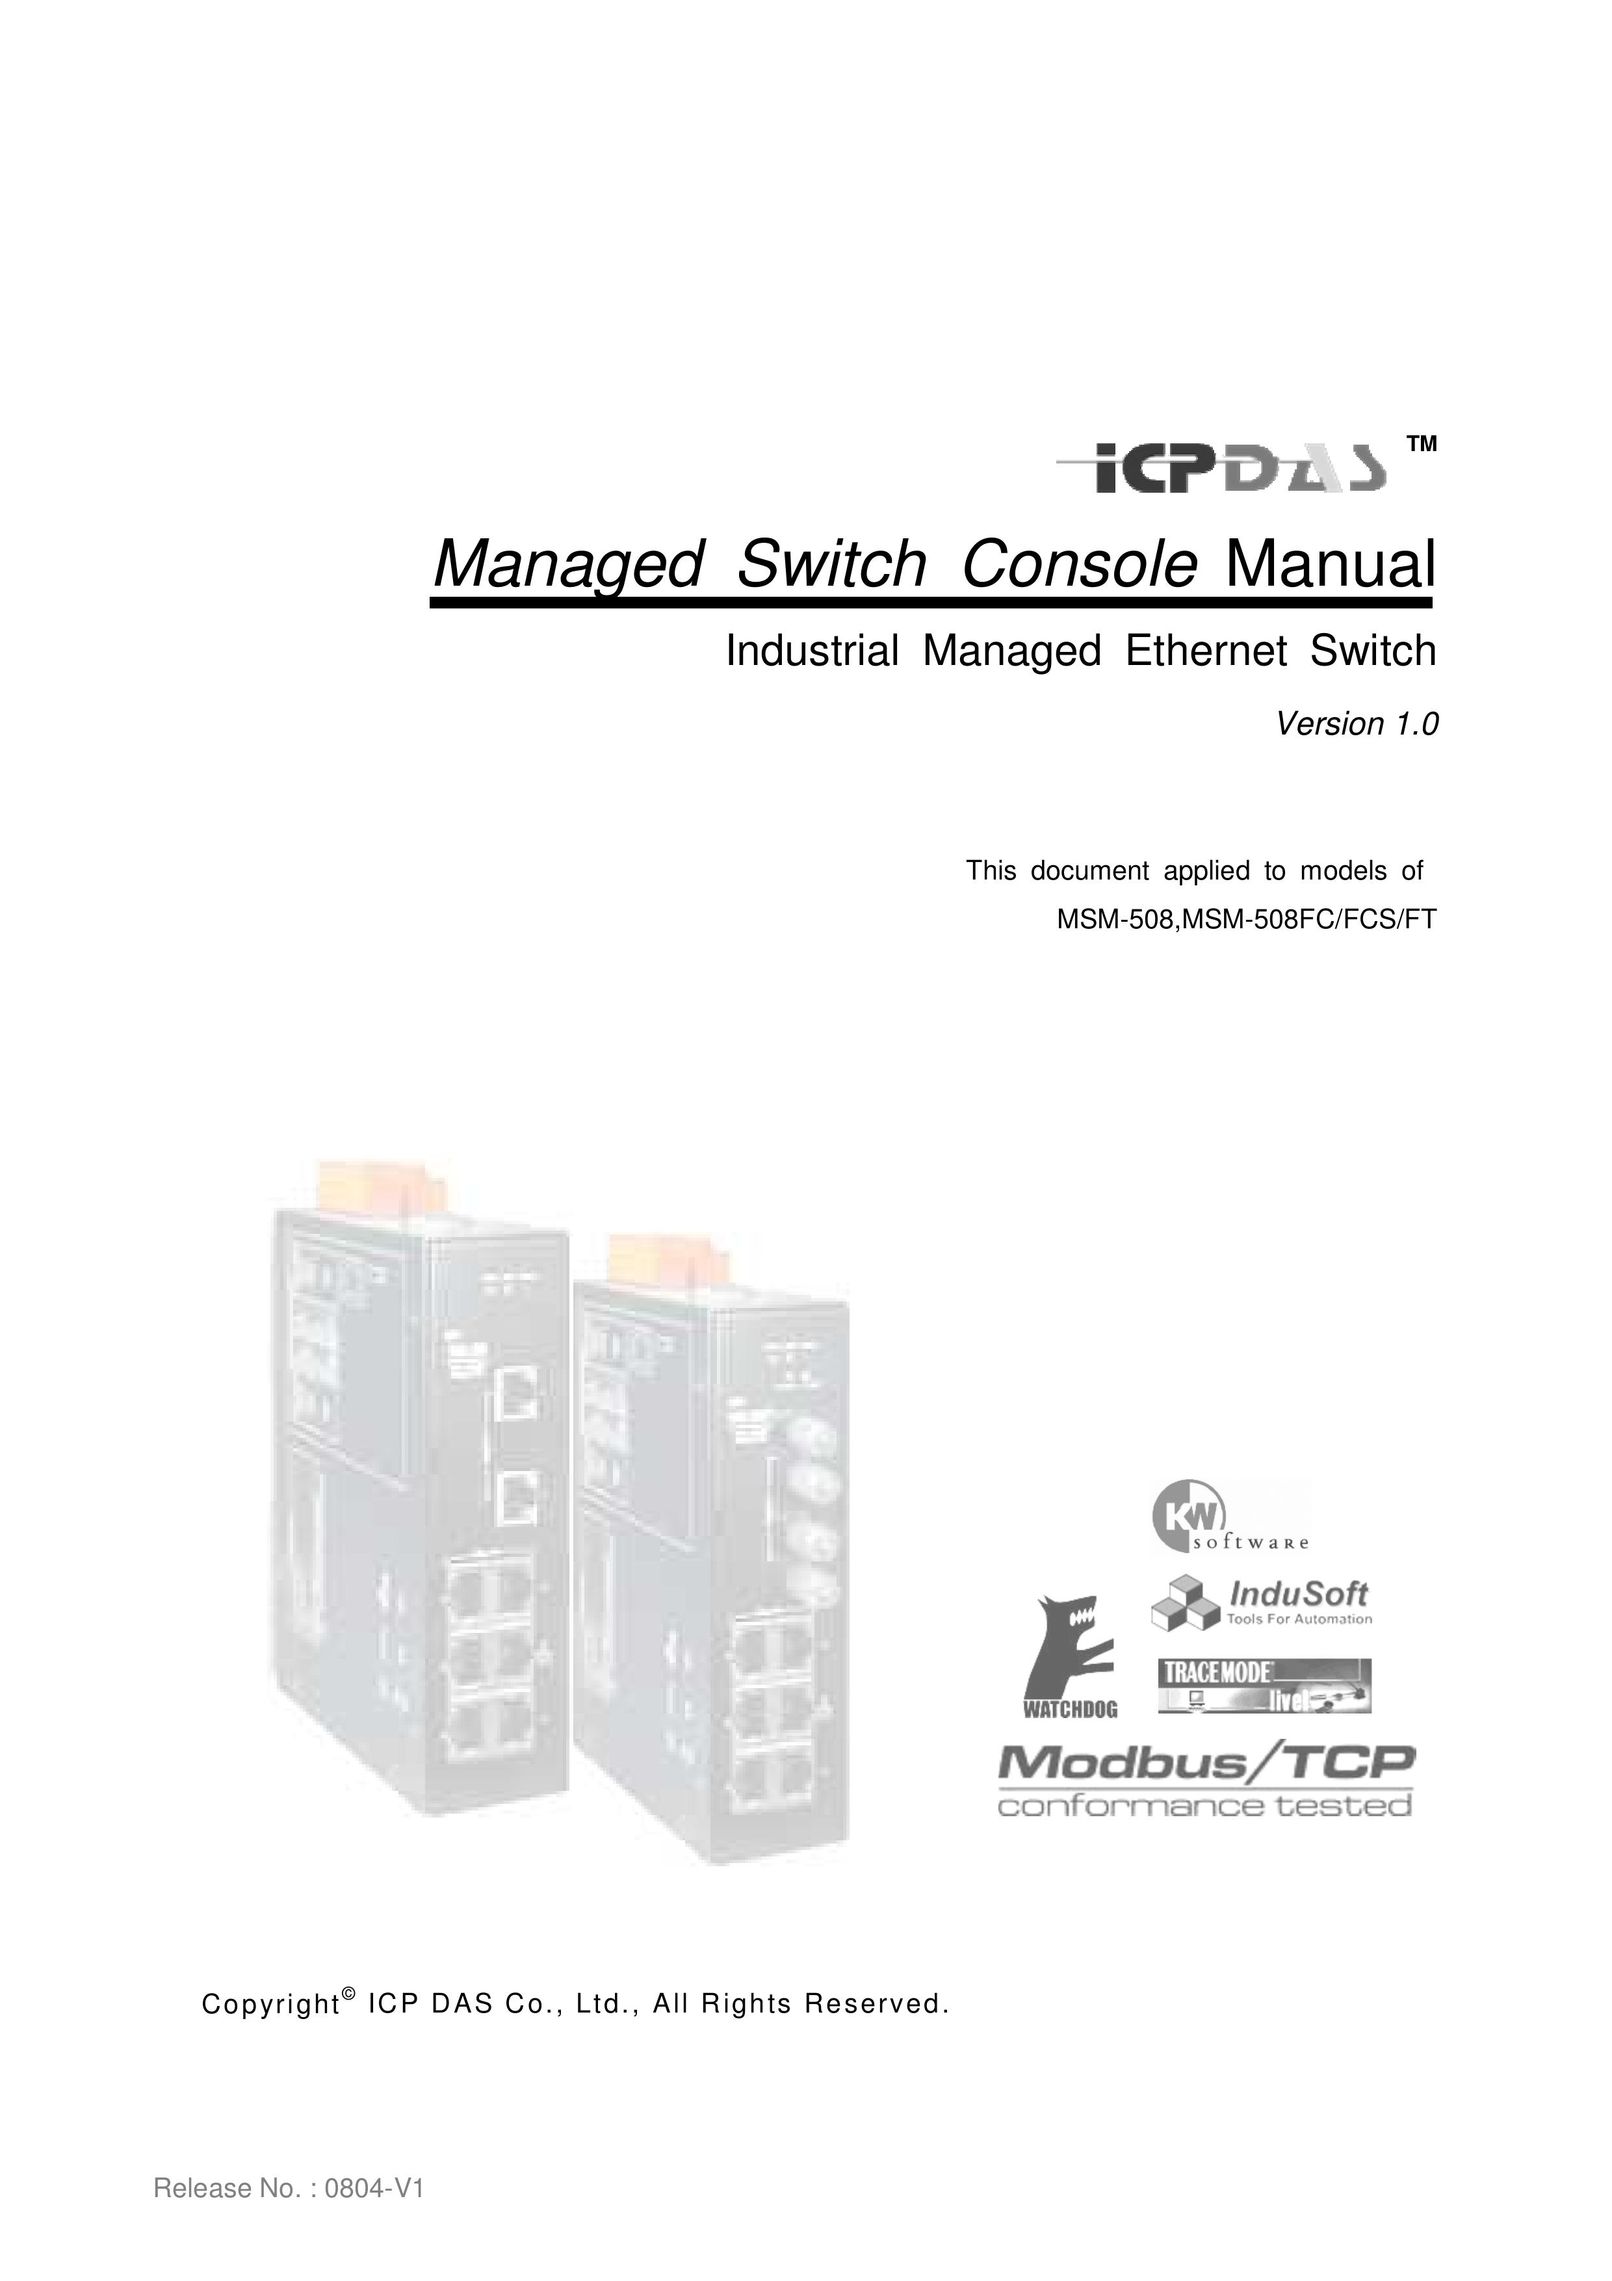 ICP DAS USA MSM-508FC Switch User Manual